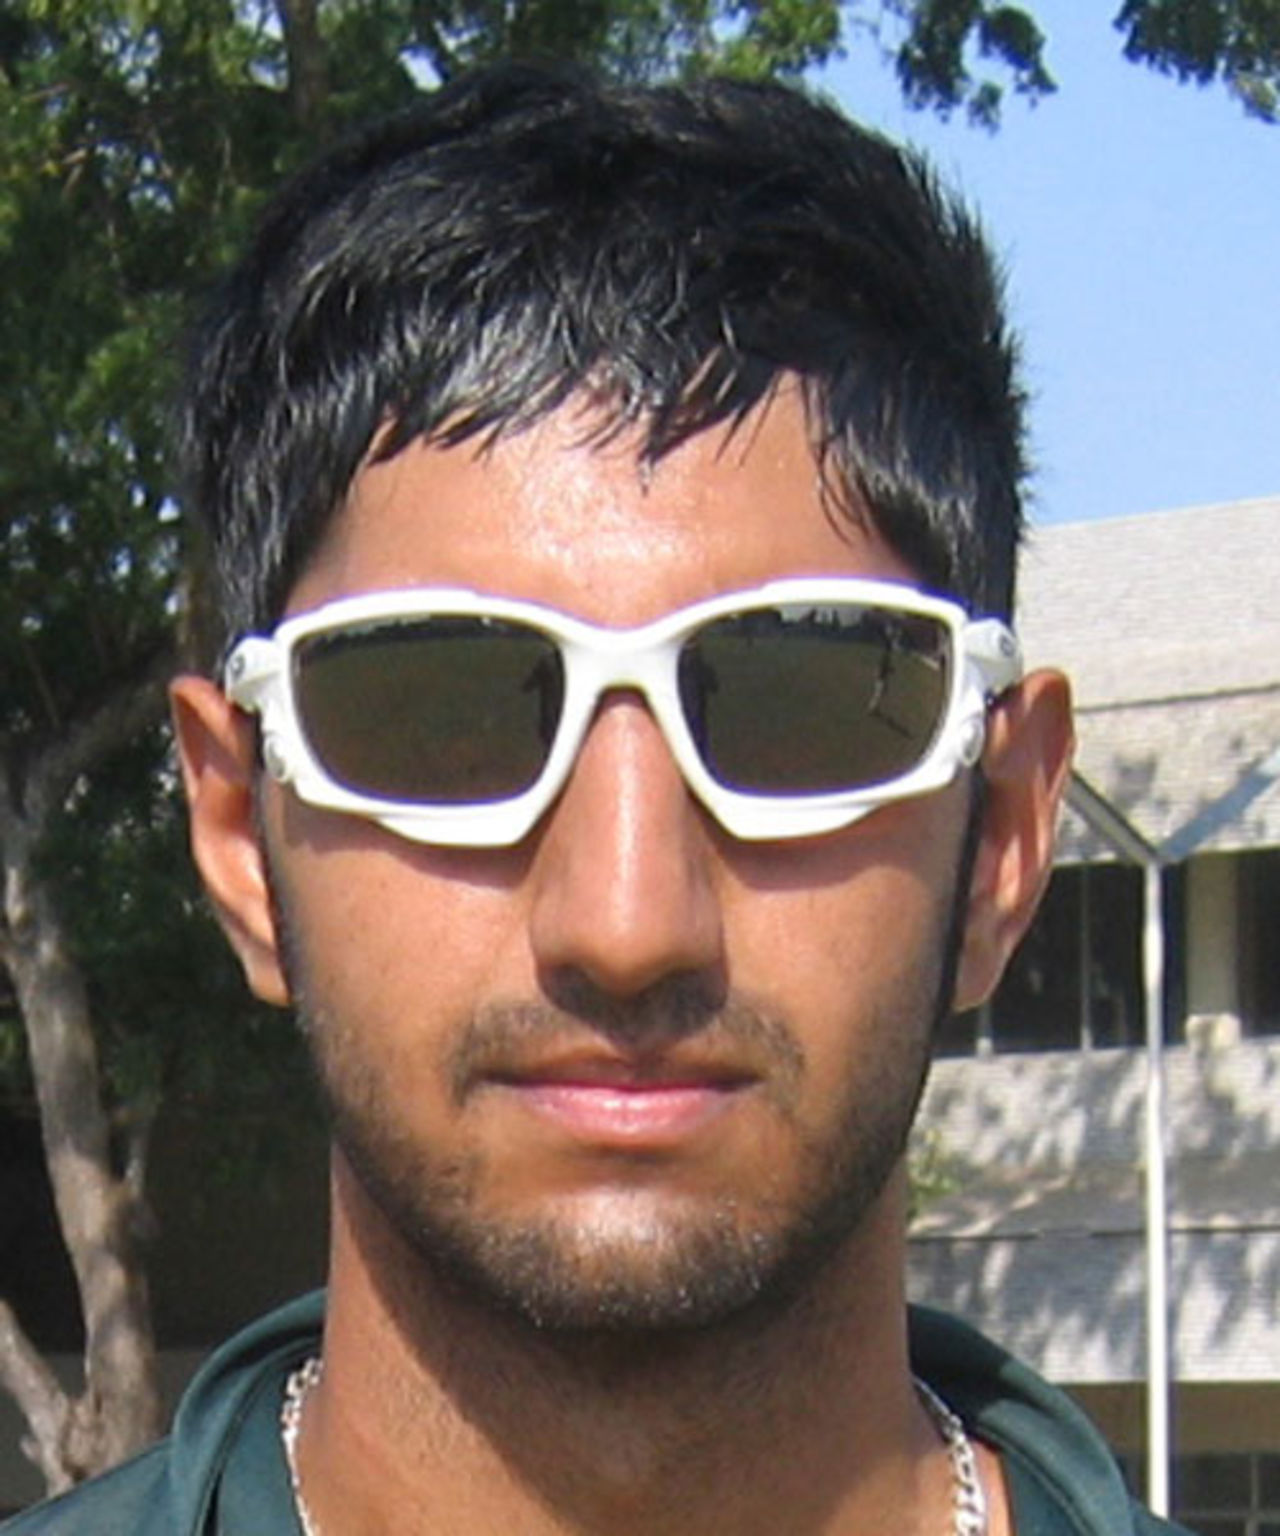 Irfan Karim